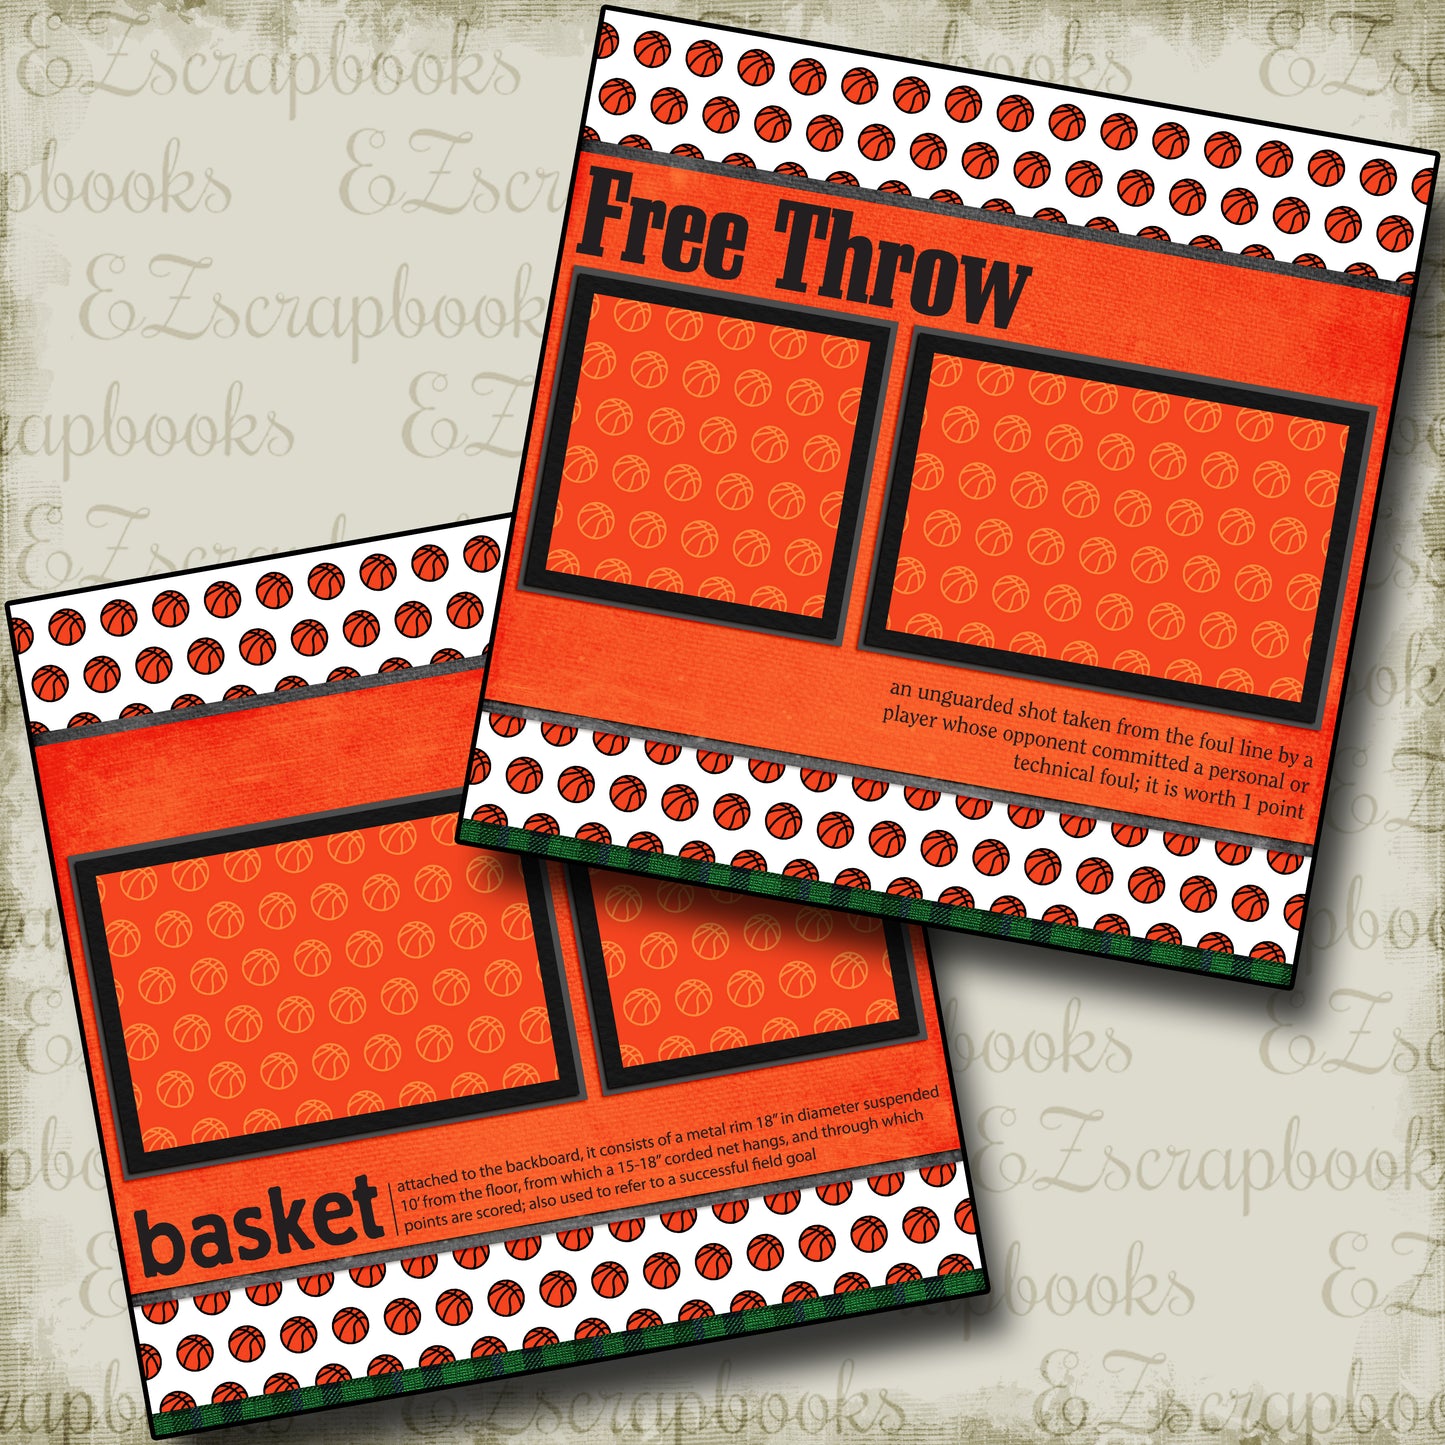 Free Throw - 3696 - EZscrapbooks Scrapbook Layouts basketball, Sports